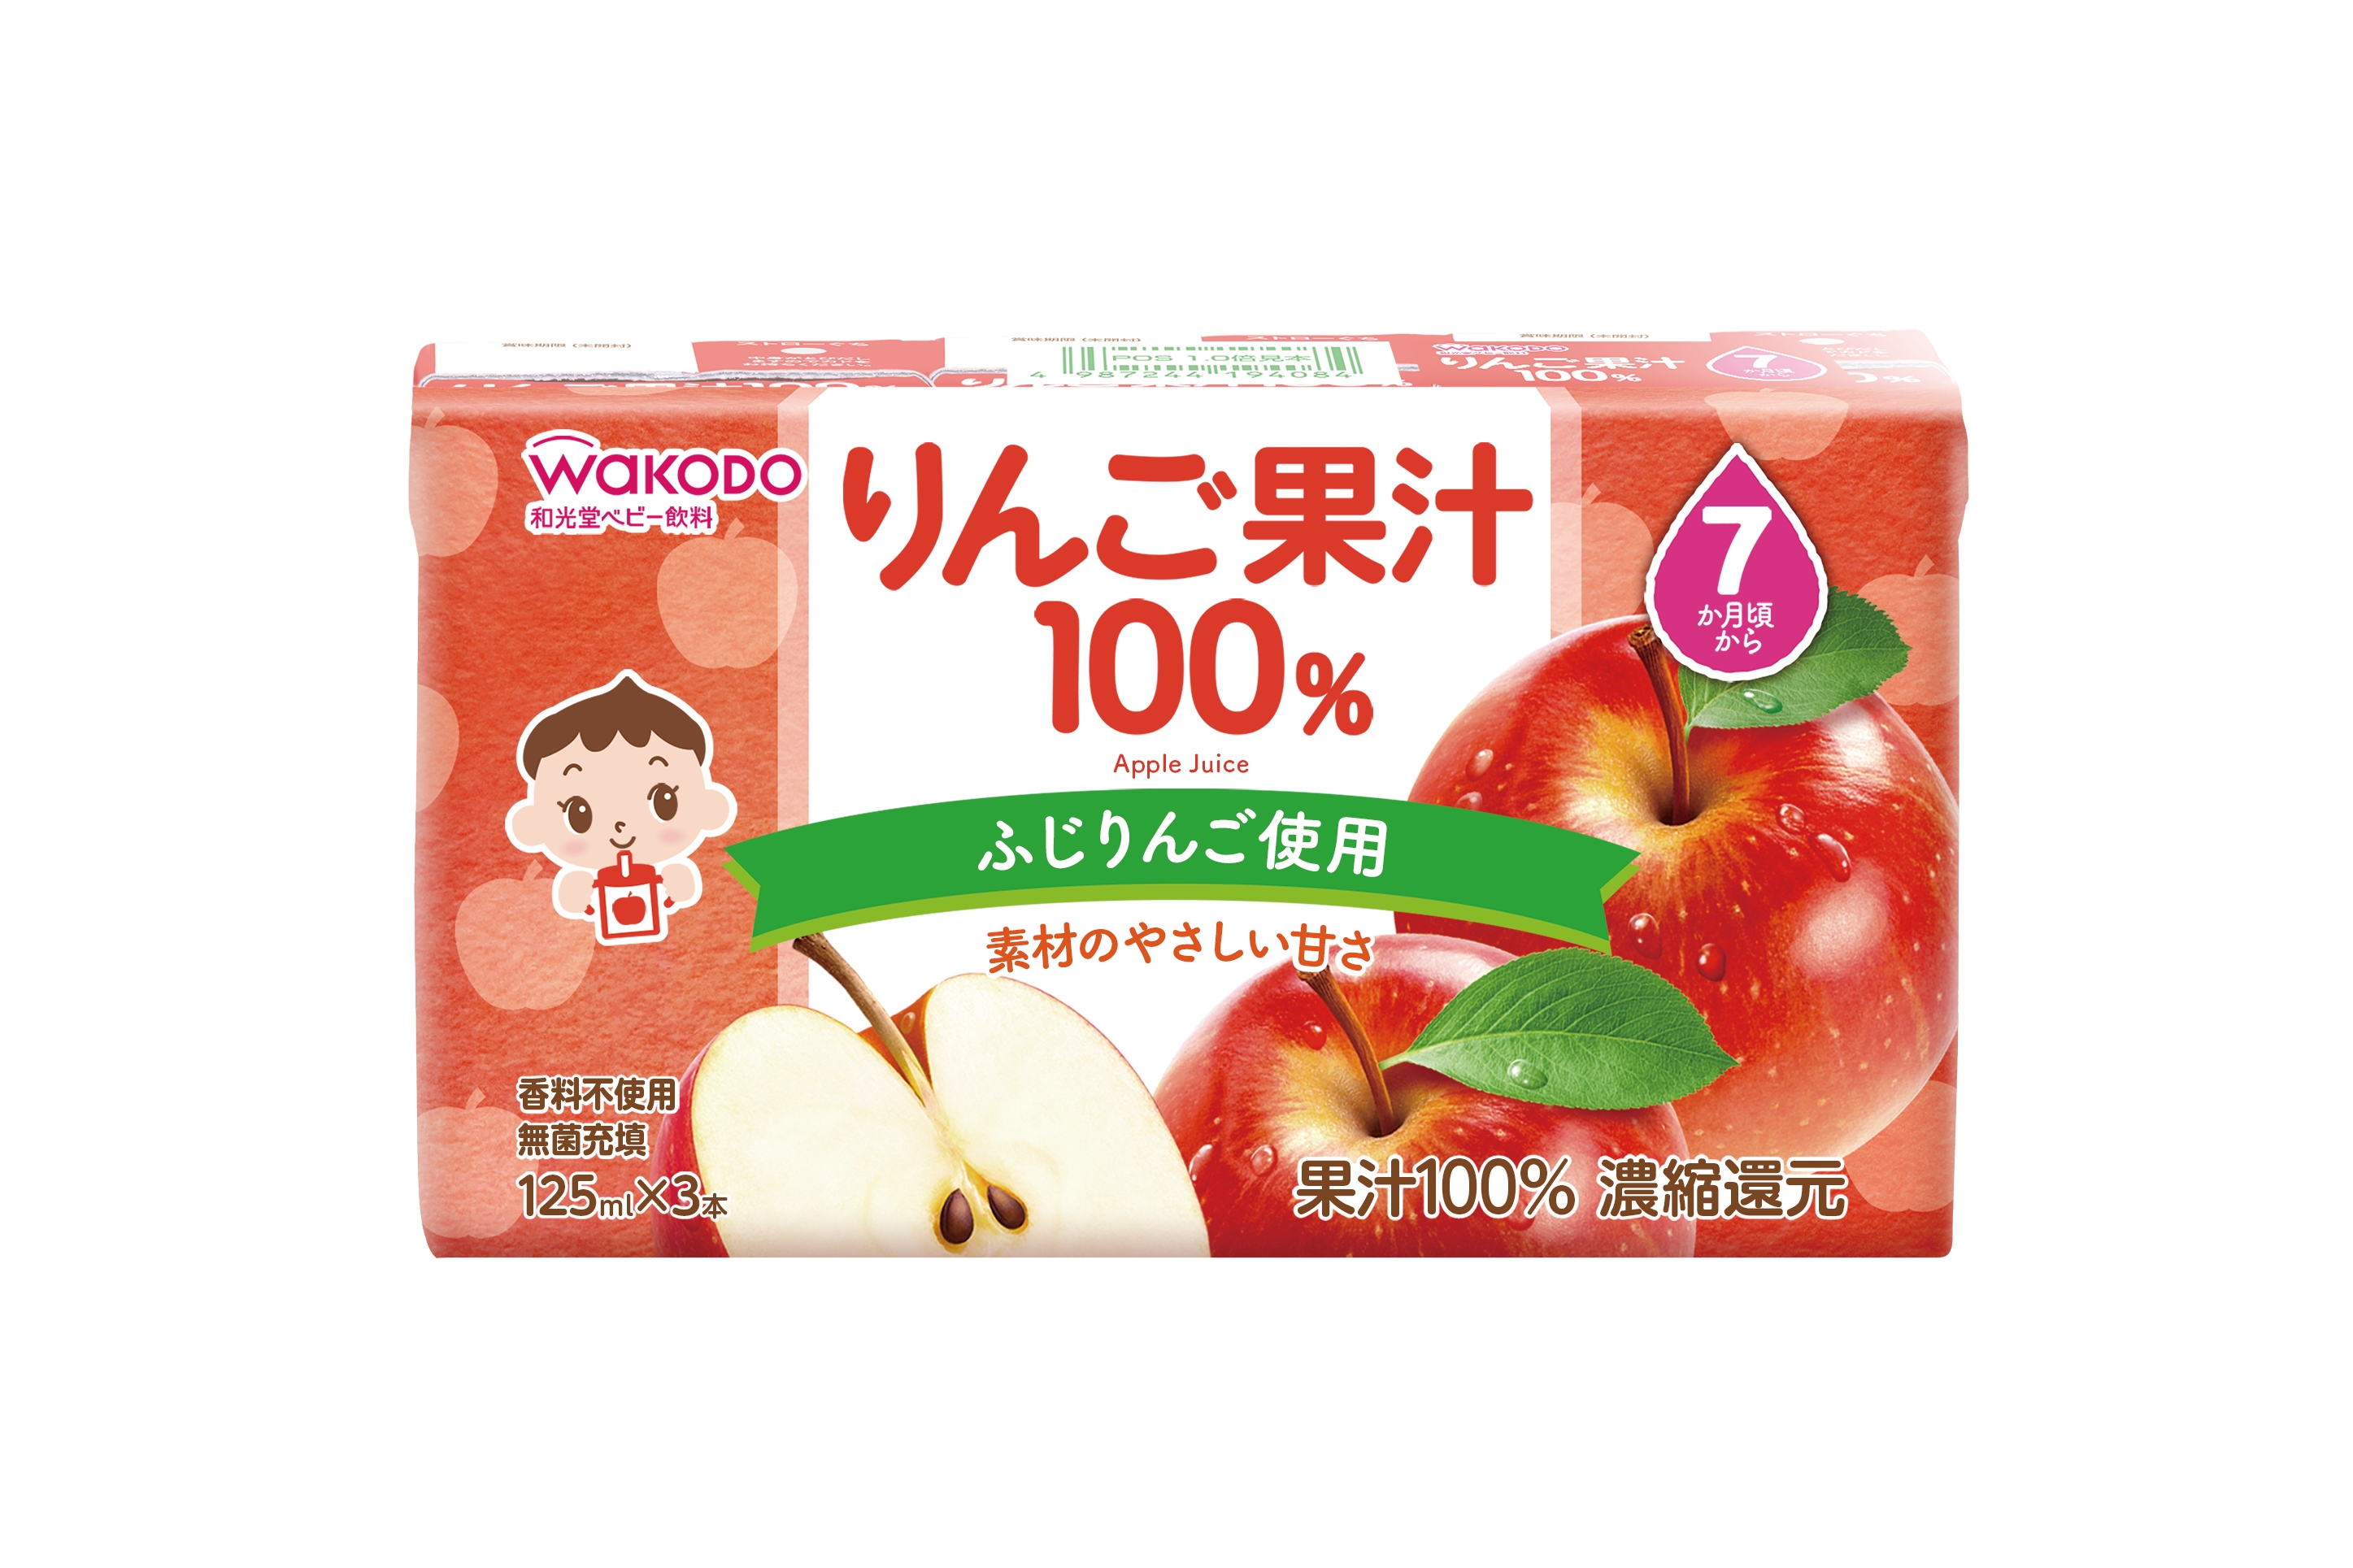 Wakodo 100% Apple Juice (Bundle of6)